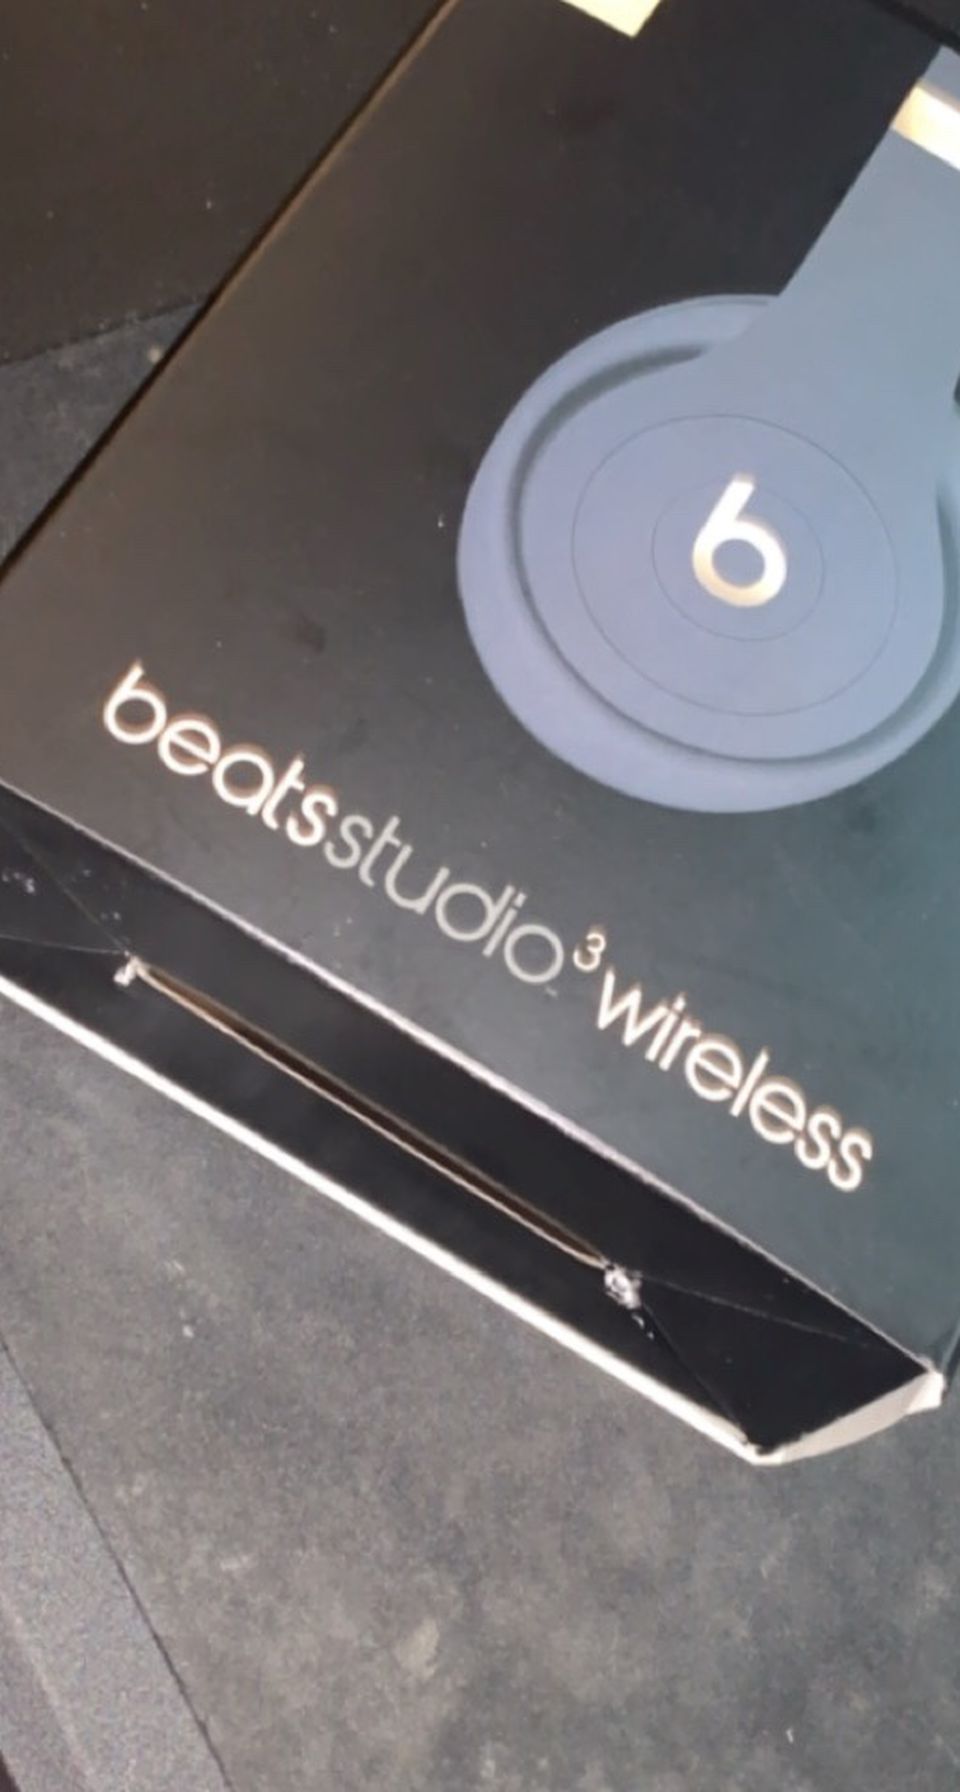 beats studio 3 wireless